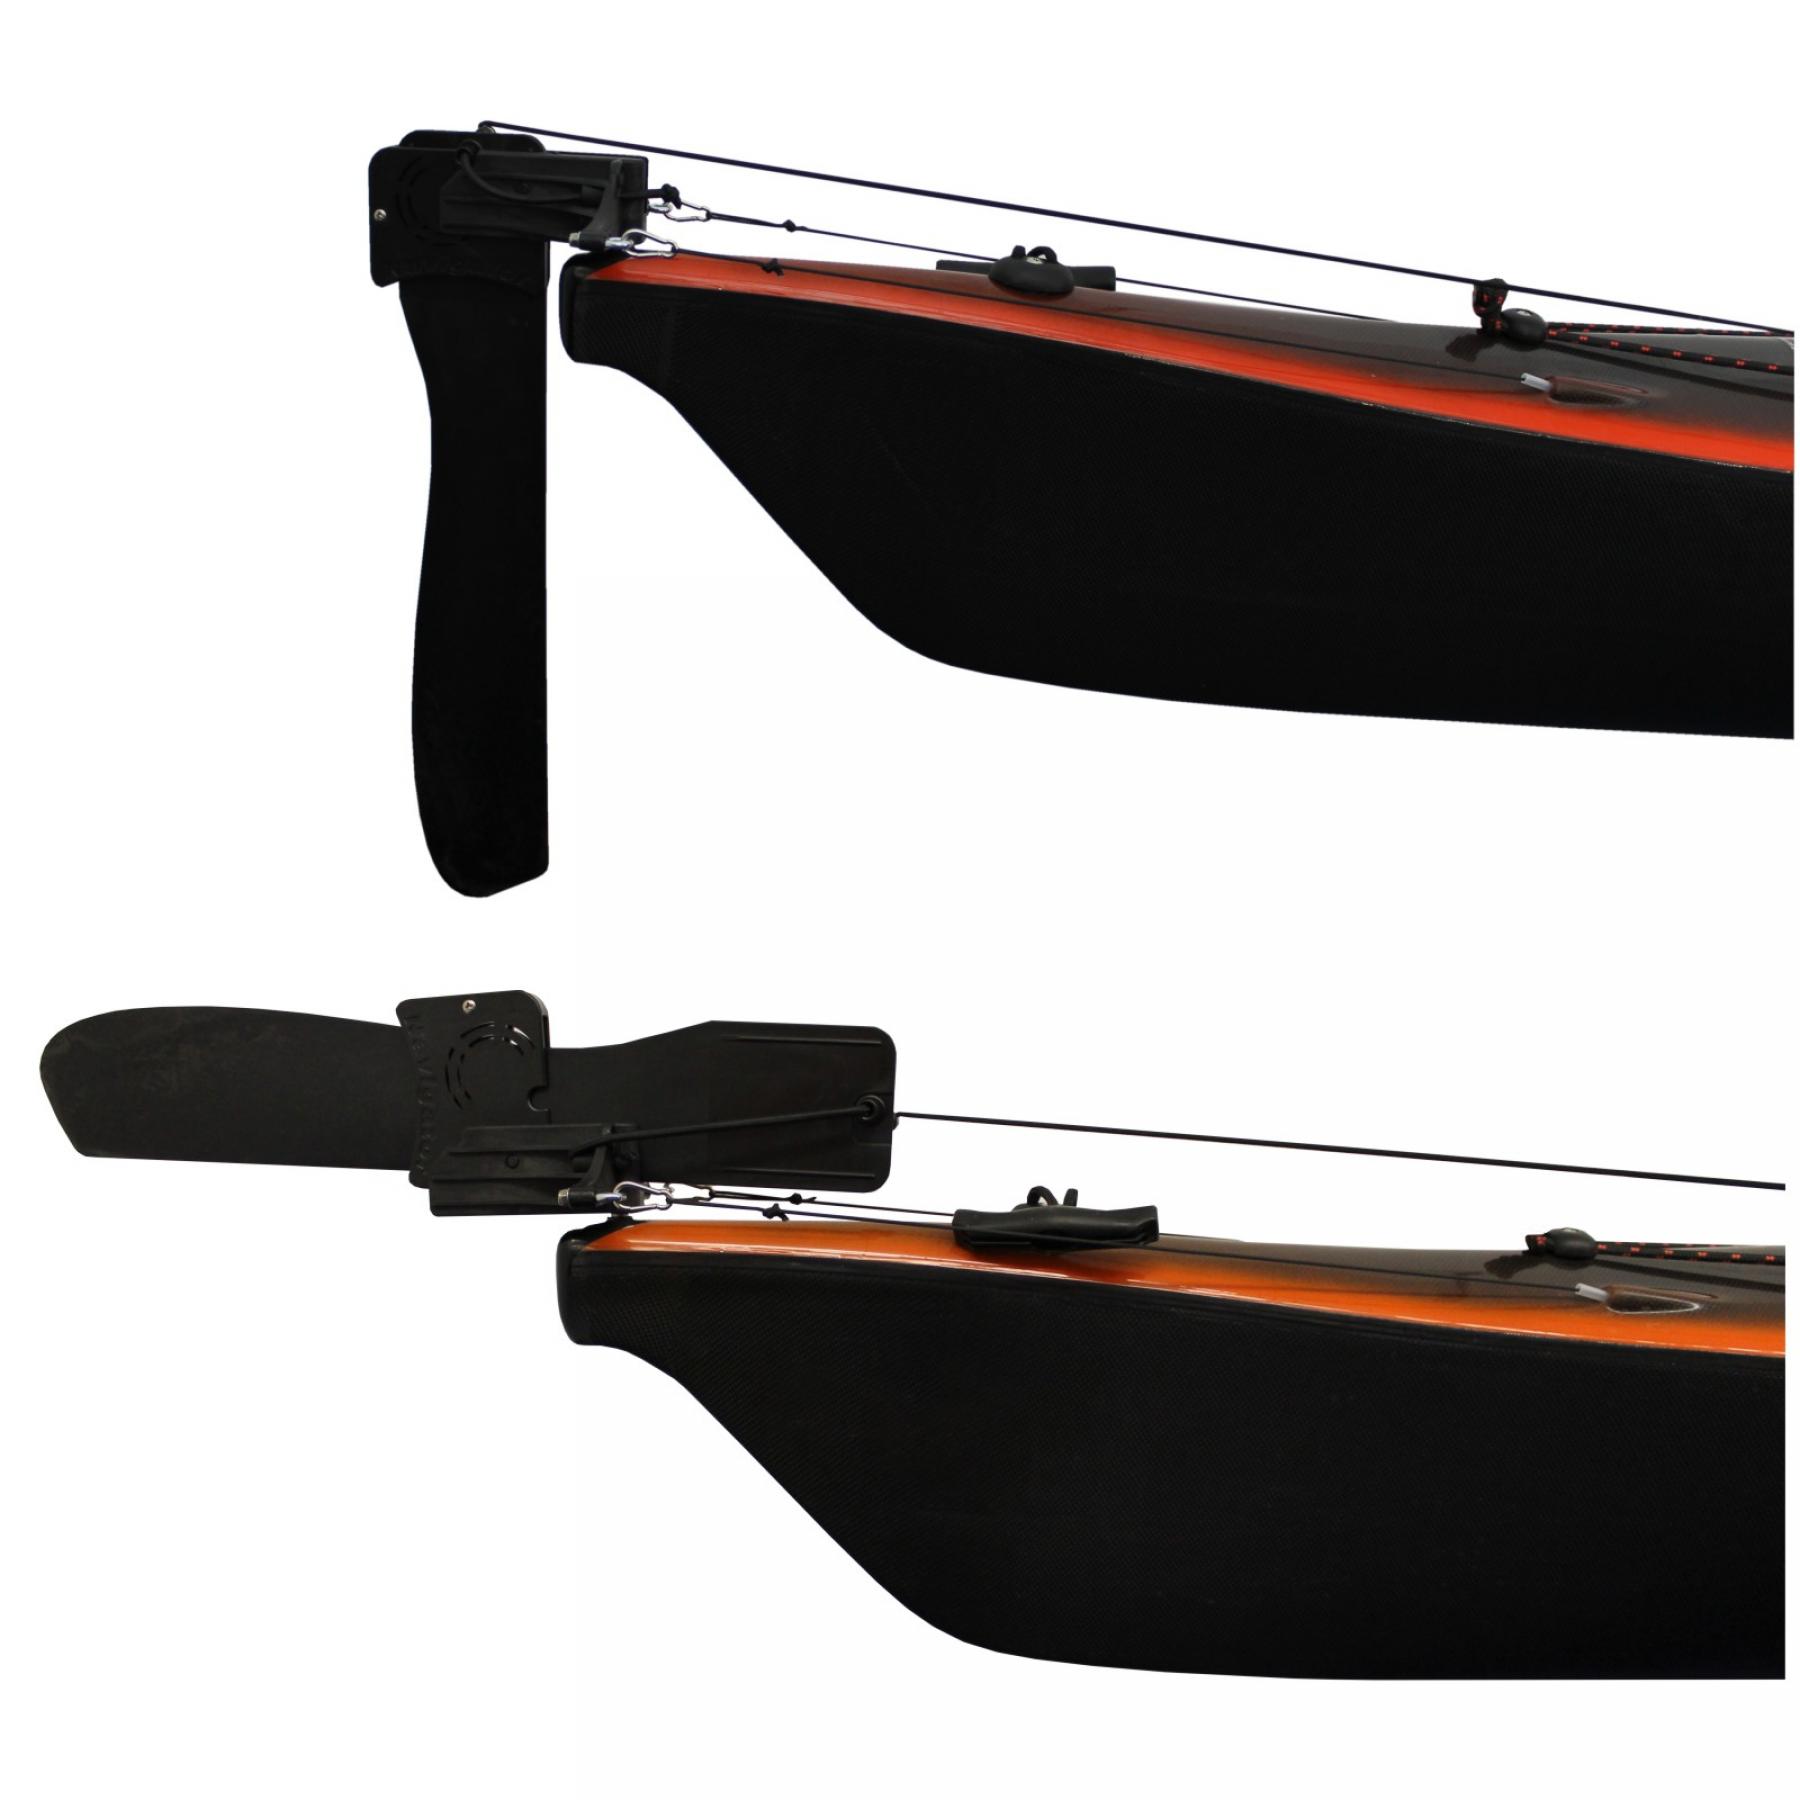 Steueranlage Komplett-Set Kajak Sport Kayak Gear